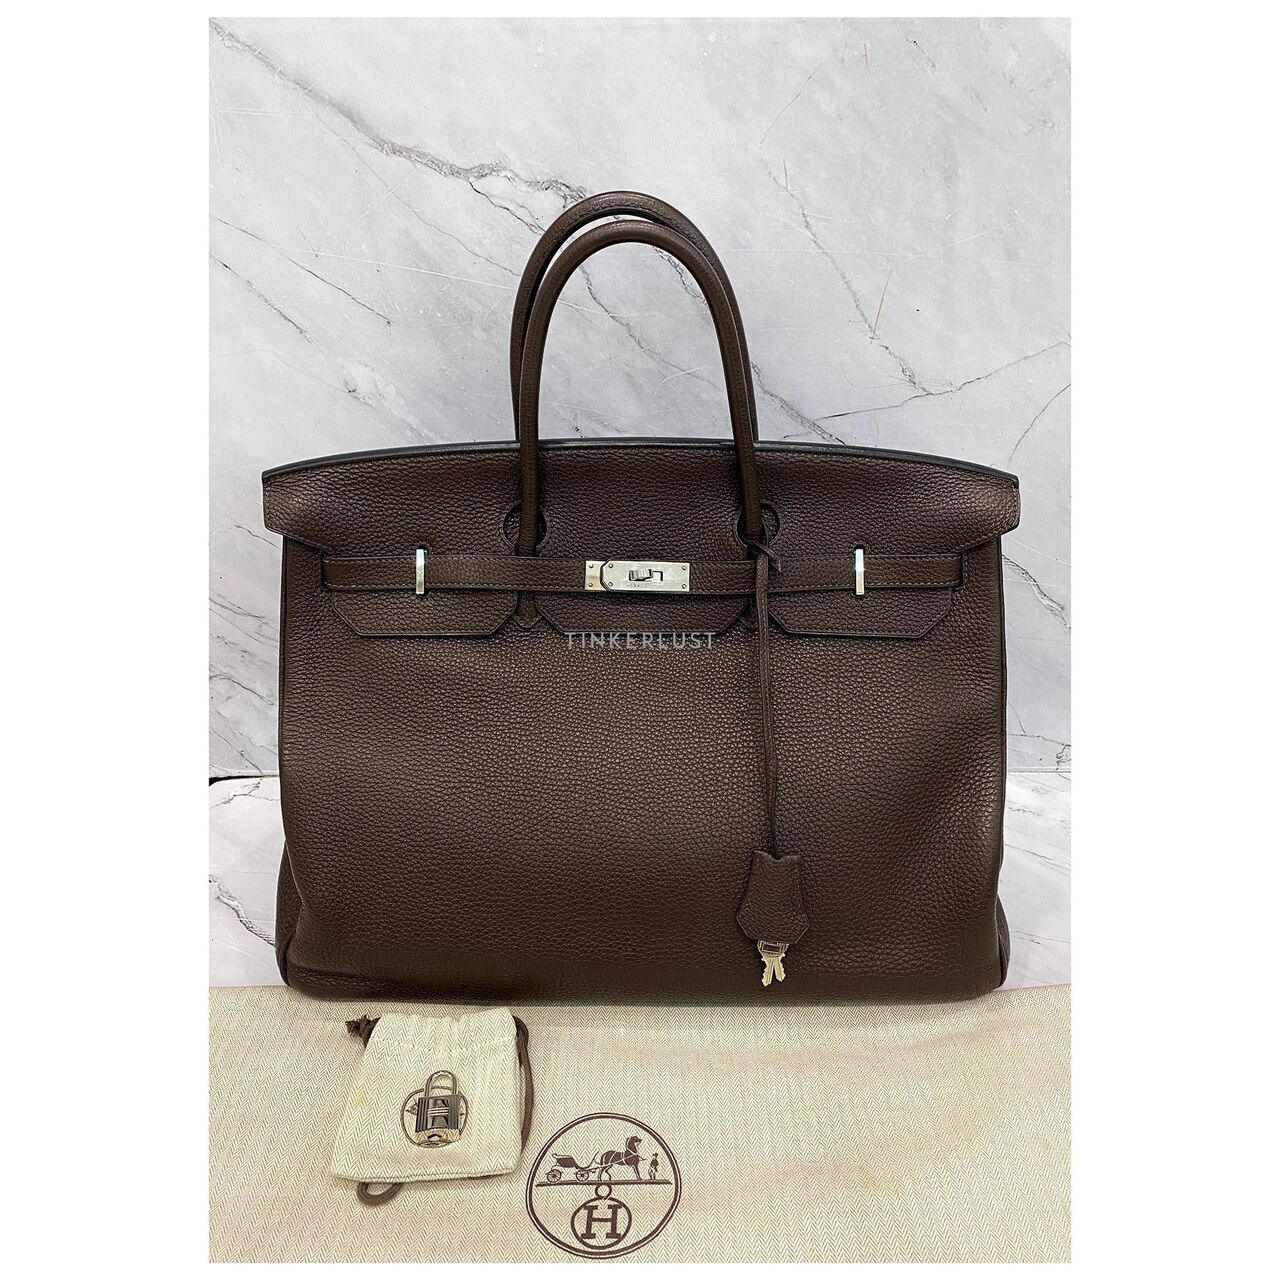 Hermes Birkin 40 Choco Togo PHW #M Handbag